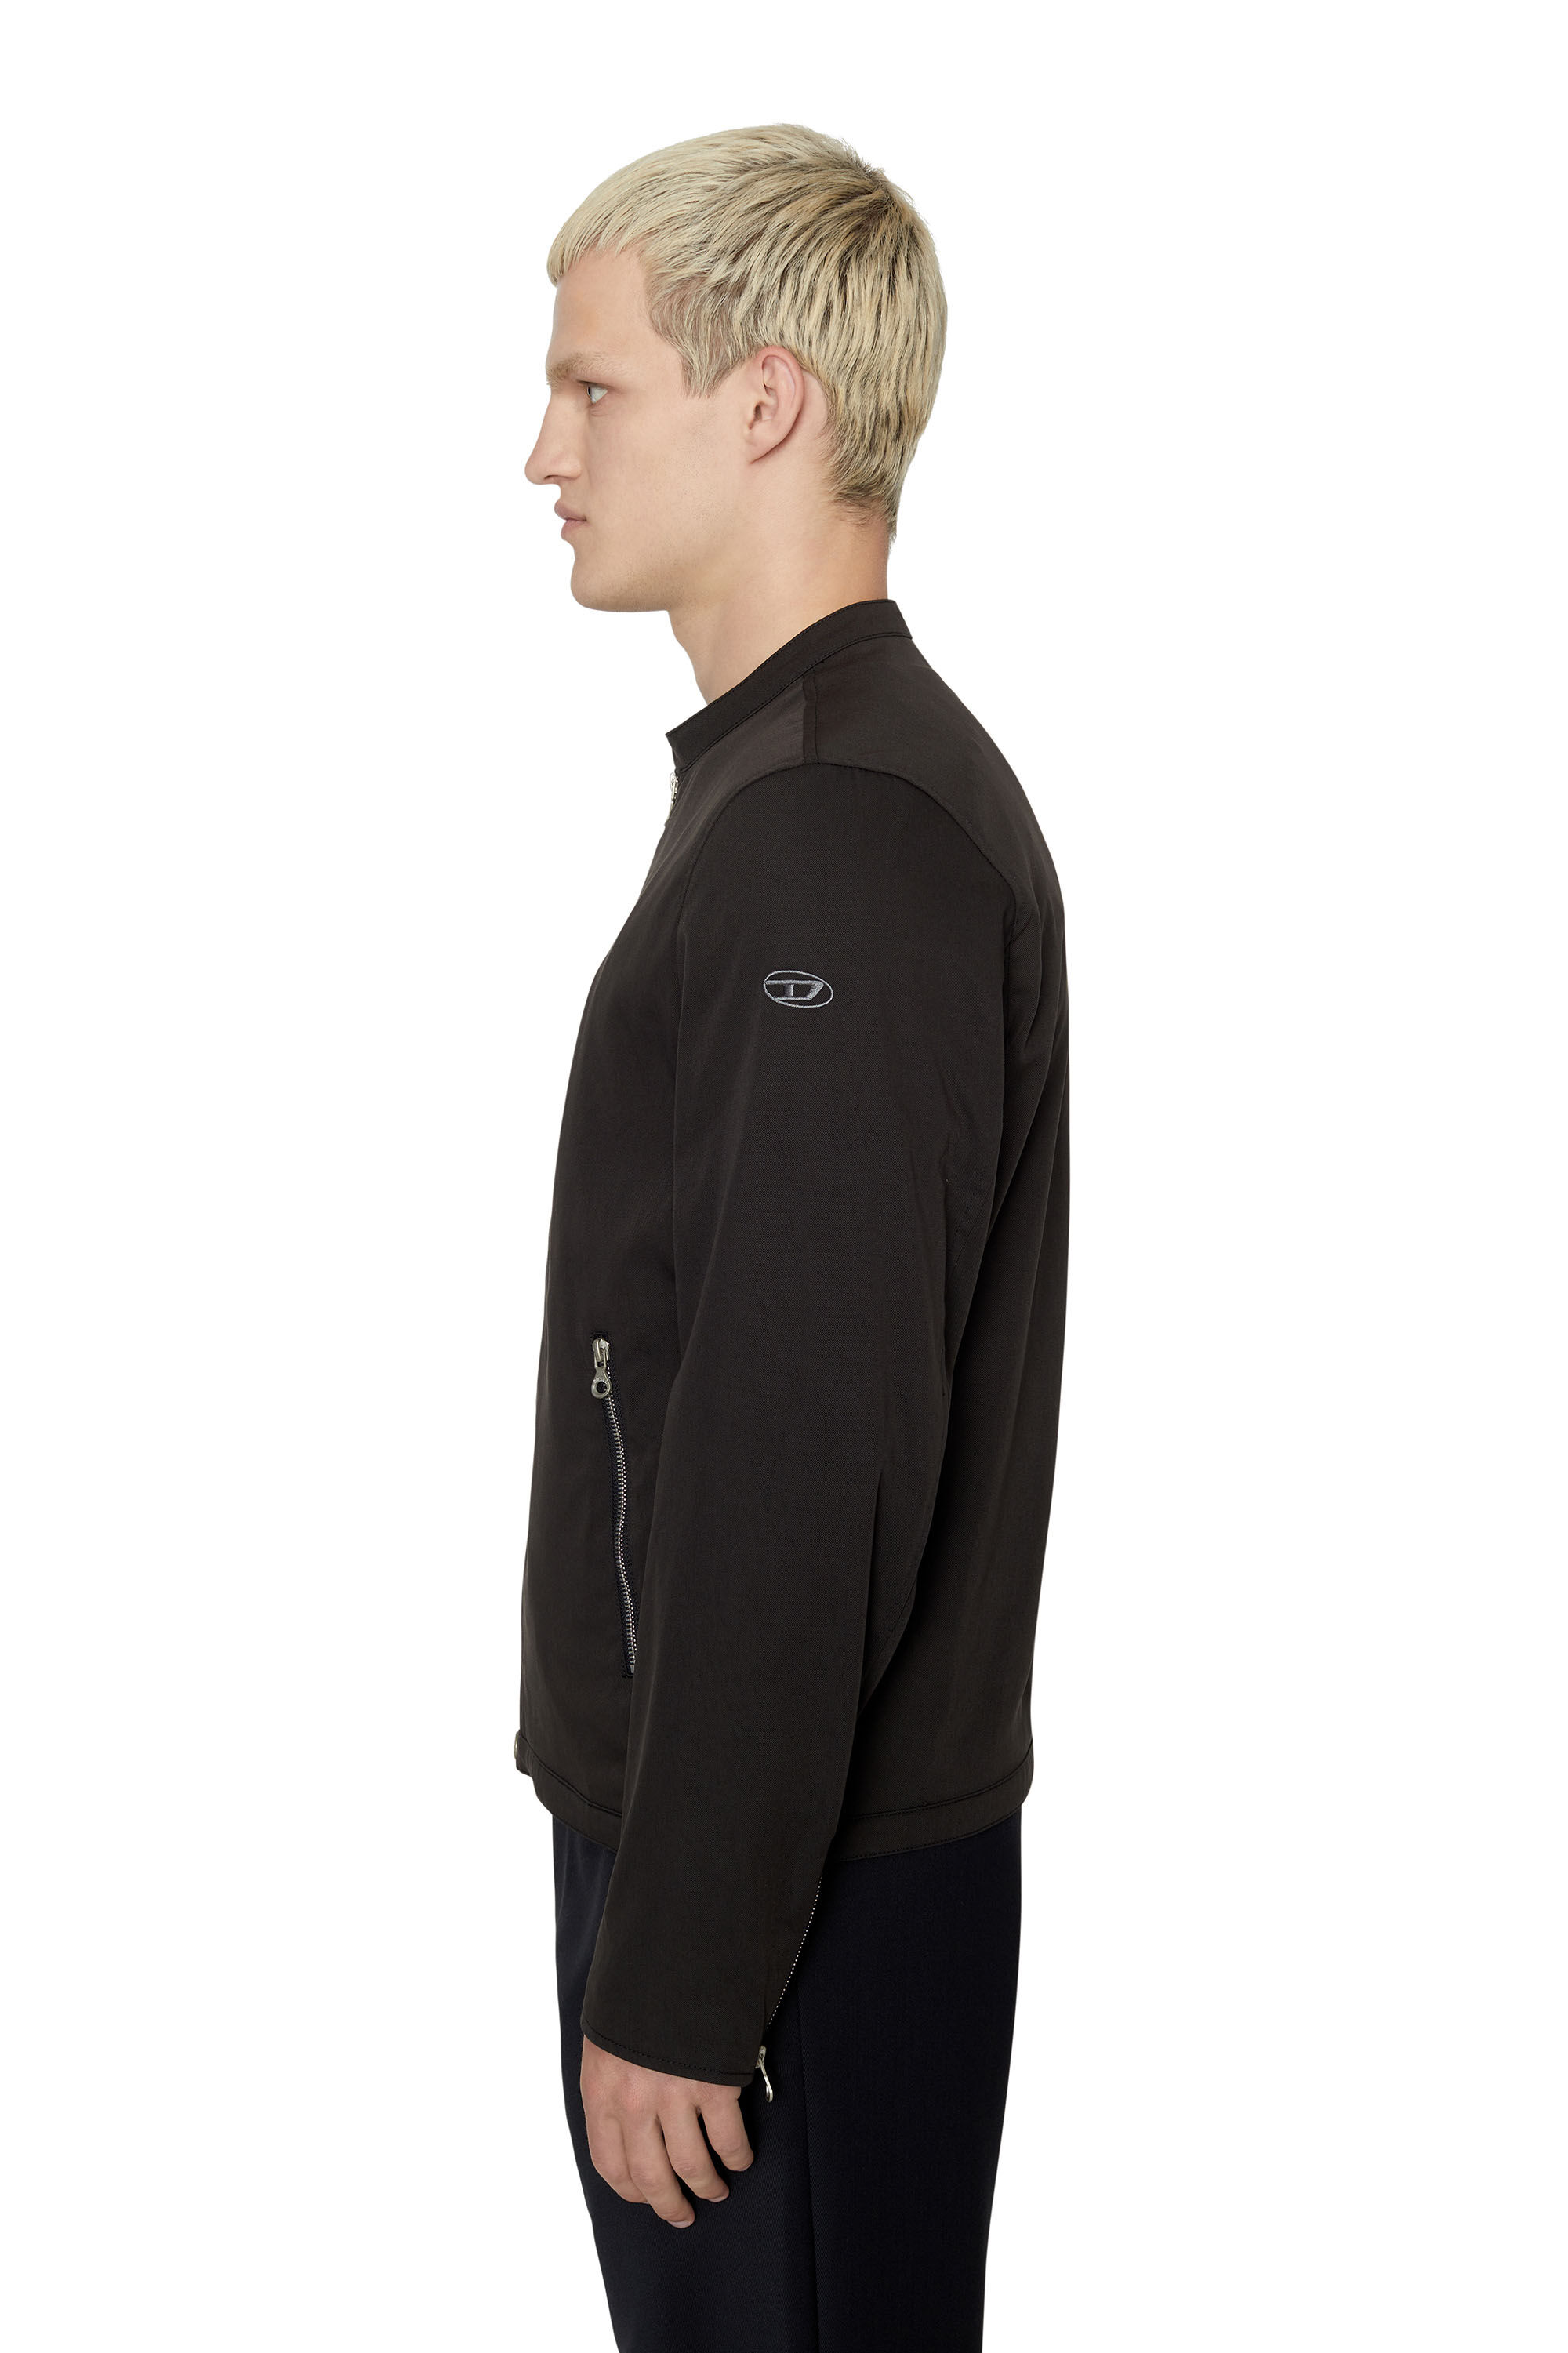 Diesel - J-GLORY-NW, Man Biker jacket in cotton-touch nylon in Black - Image 5